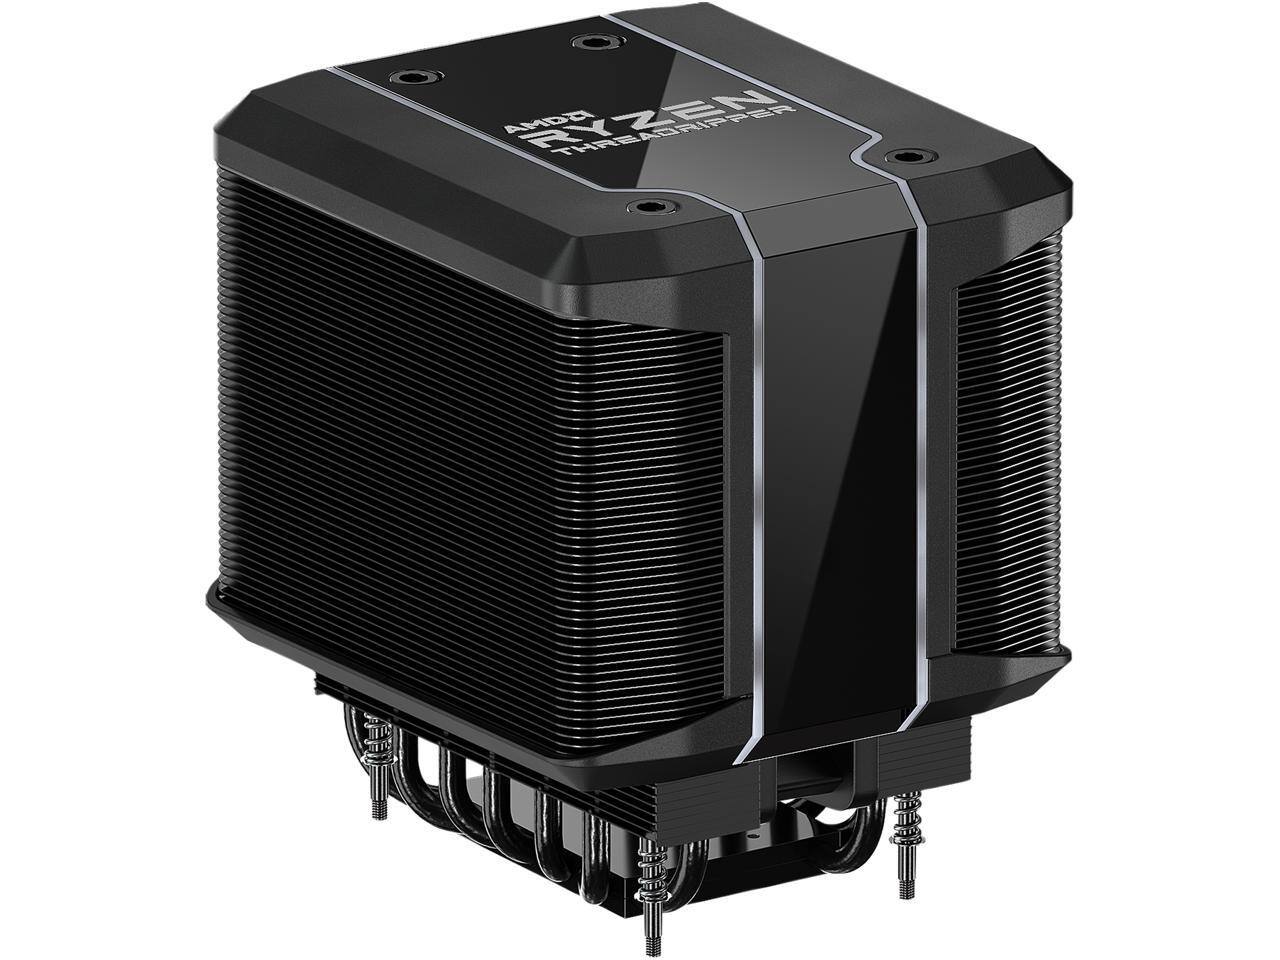 Cooler Master AMD Wraith Ripper ThreadRipper TR4 High Performance CPU Air Cooler: Free after Rebate